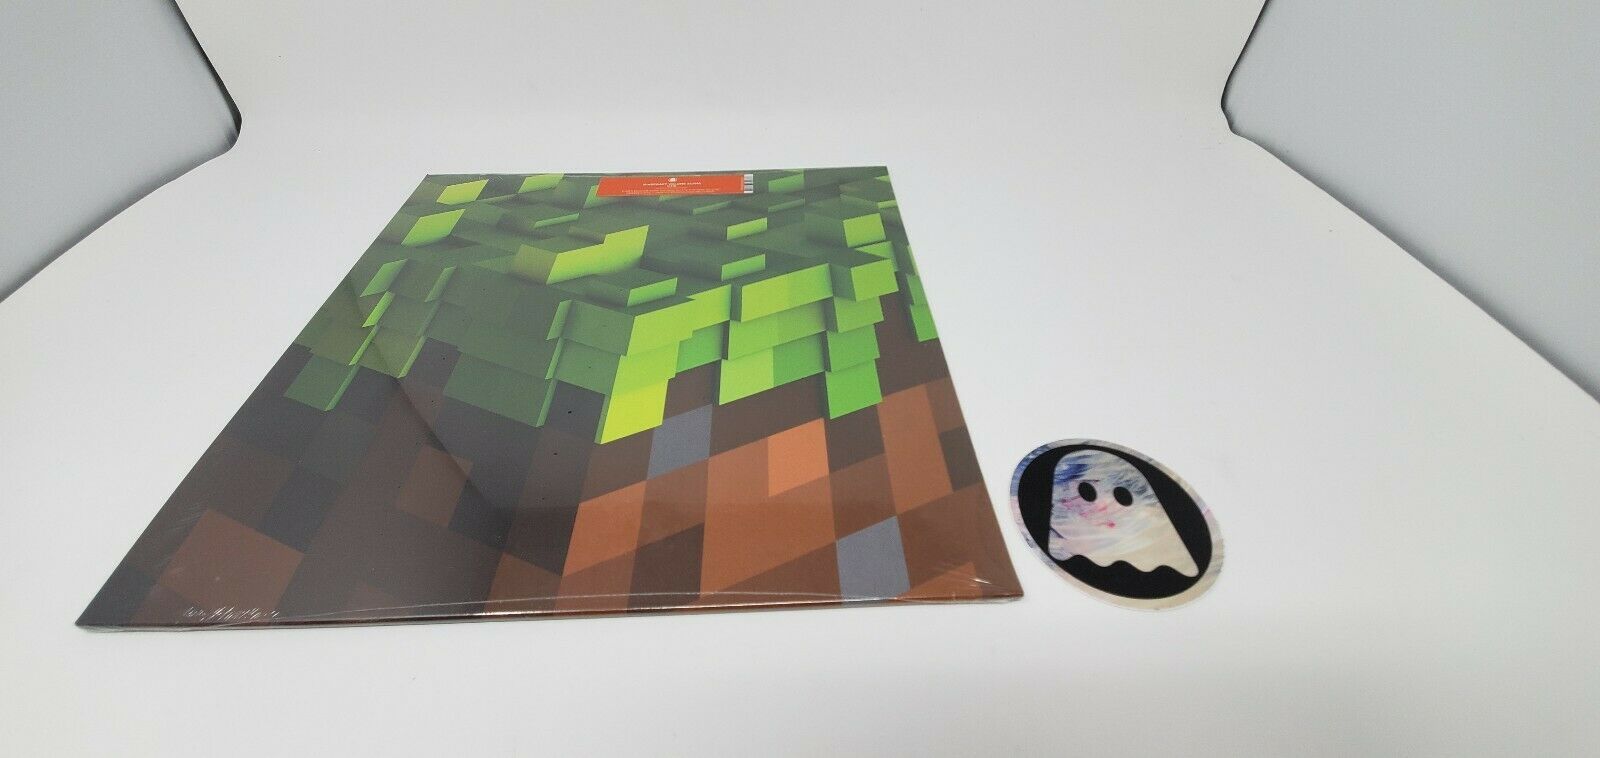 Minecraft Volume Alpha Soundtrack RARE Green Colored Vinyl LP 2015 Ghostly C418 Records